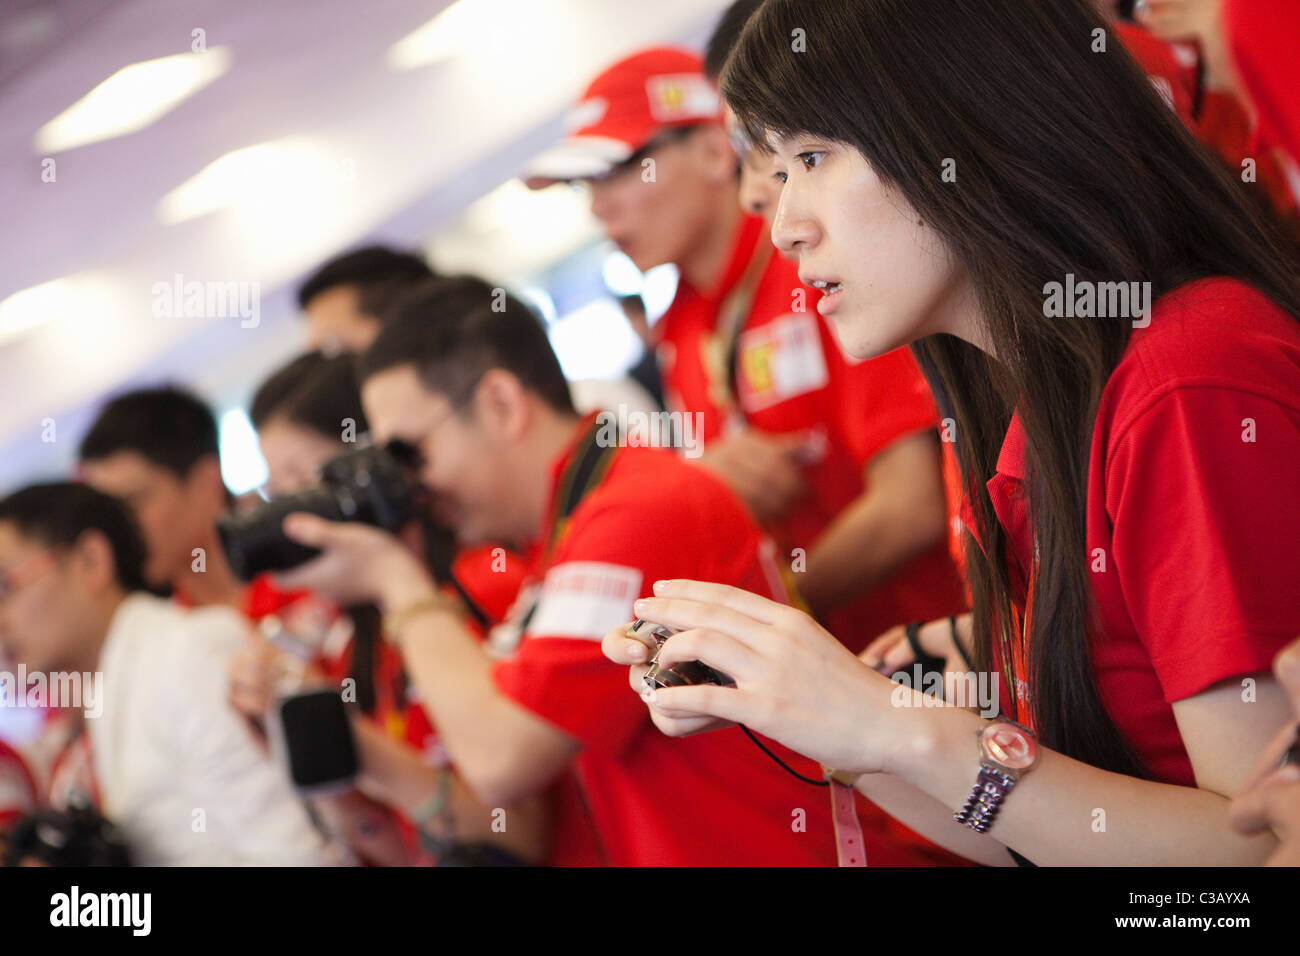 shanghai: beautiful young woman holding a camera in ferrari paddock Stock Photo